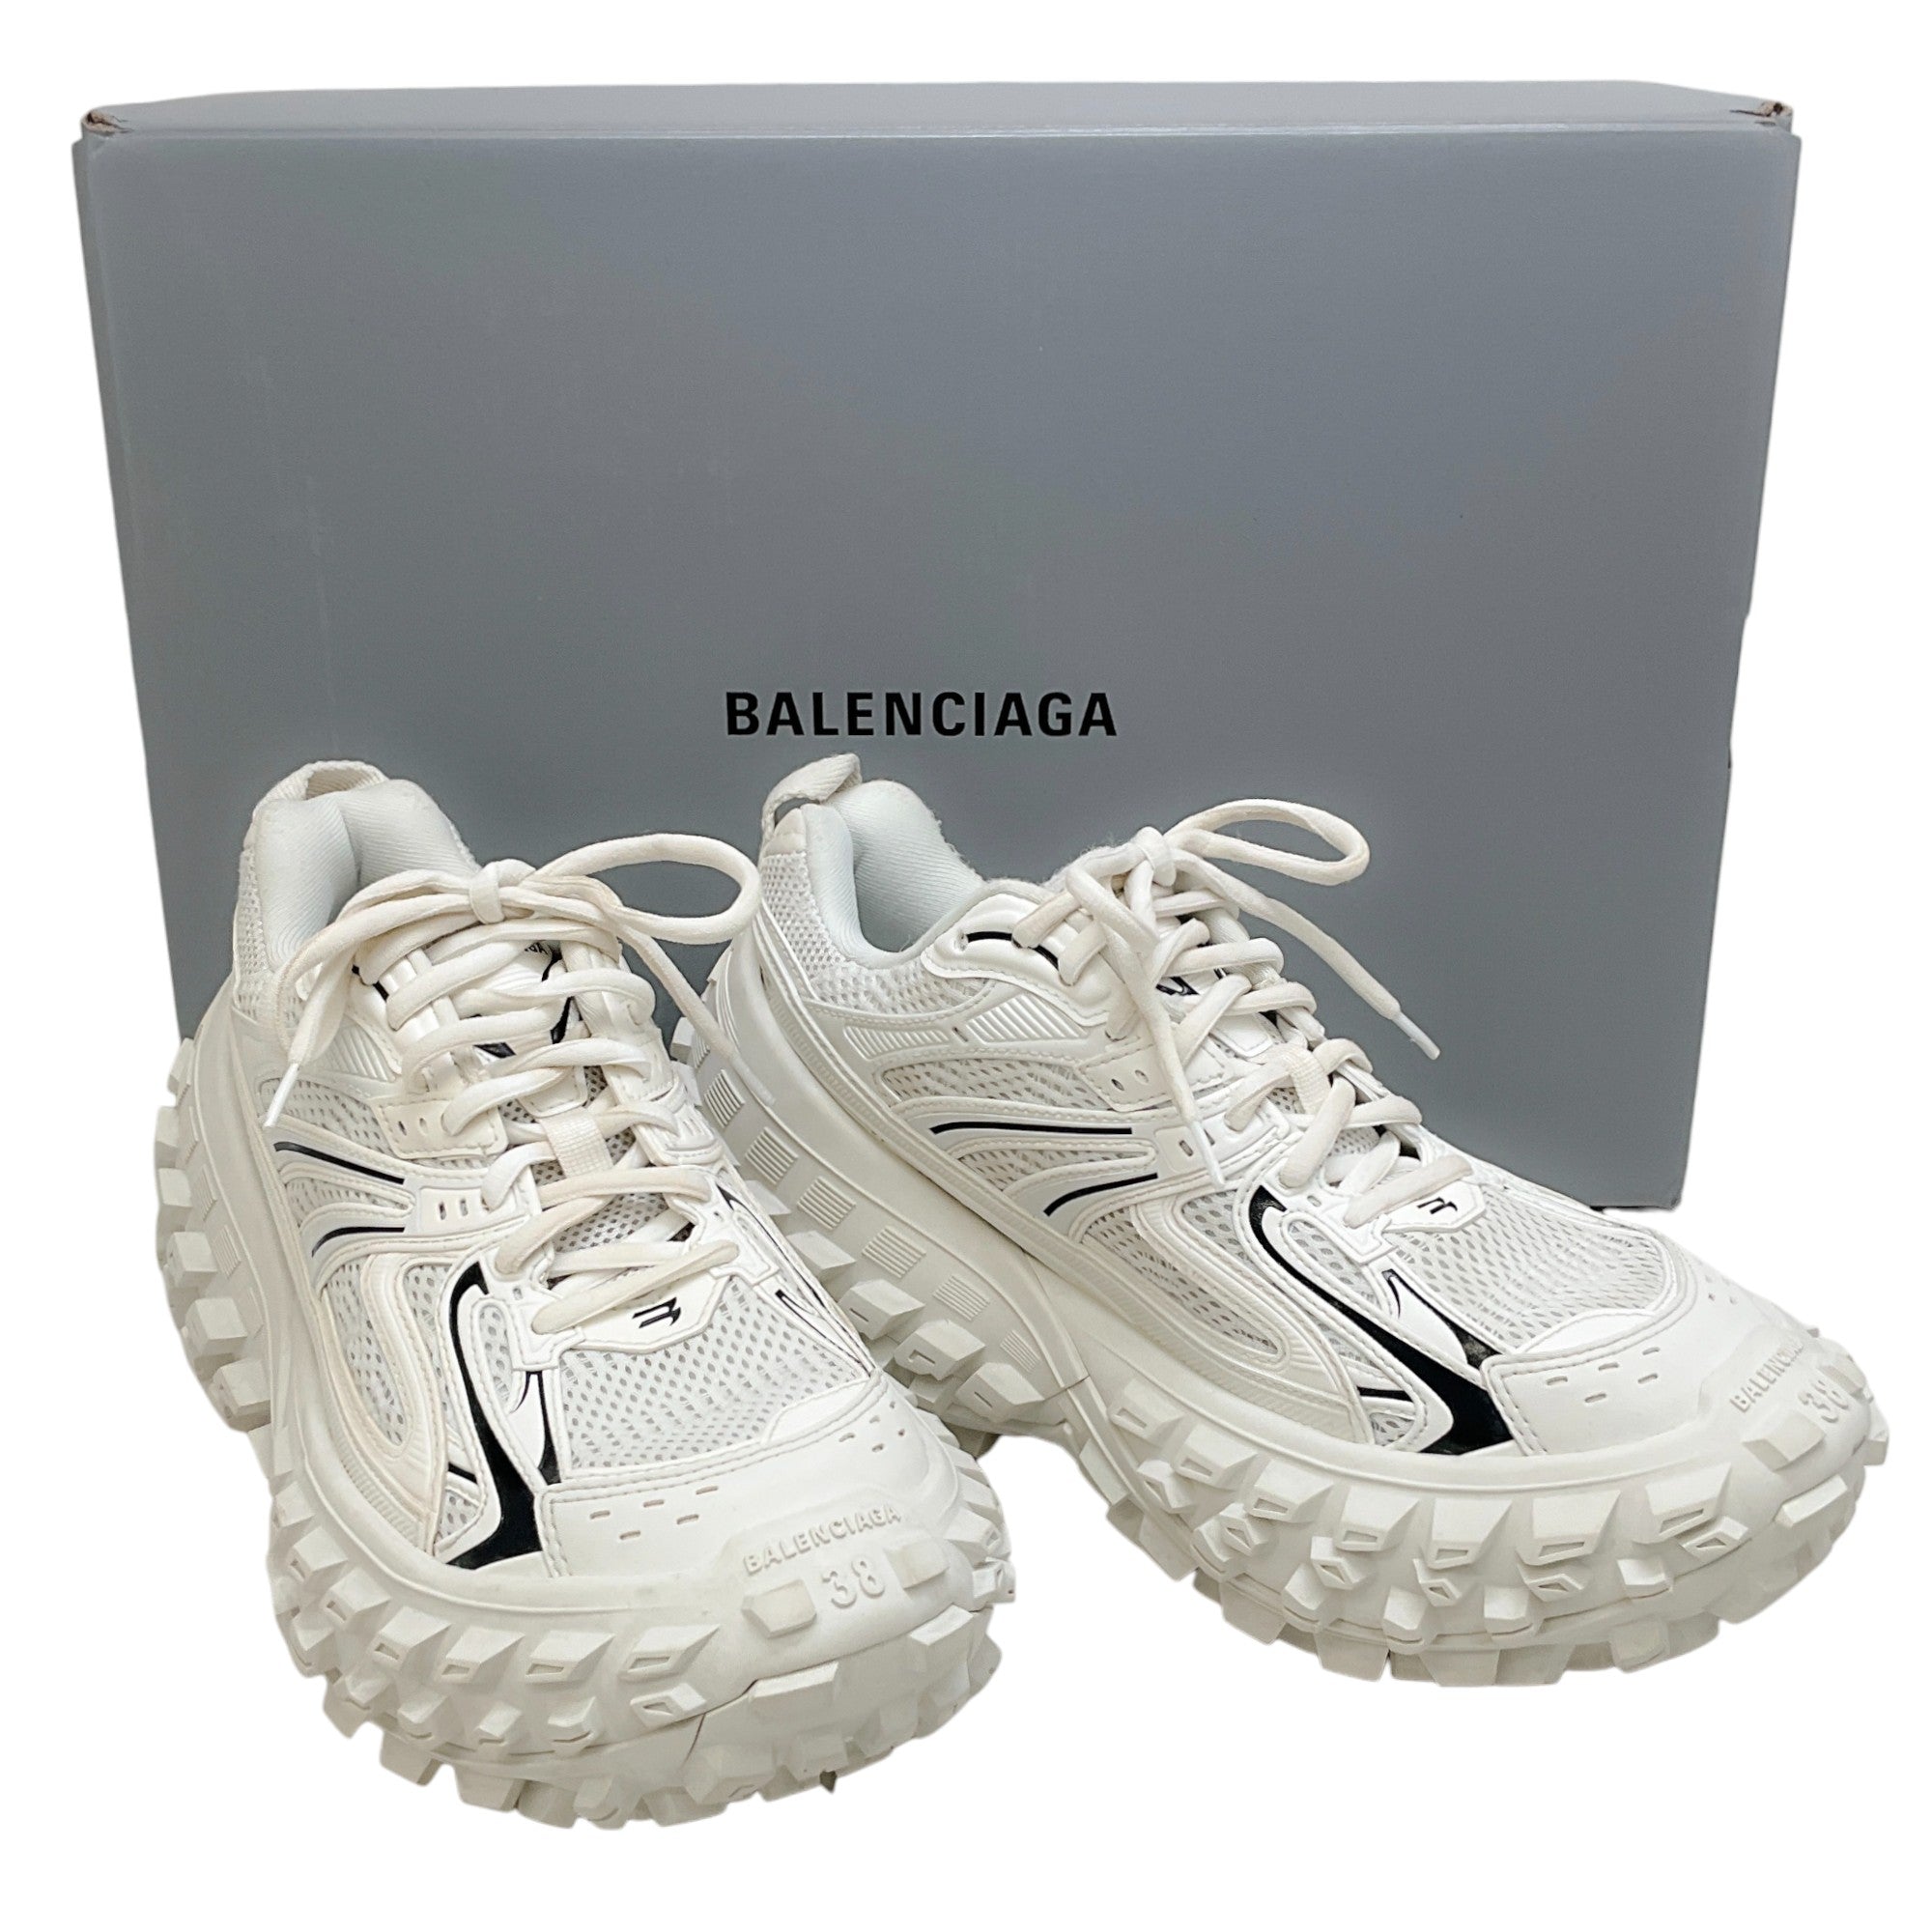 Balenciaga Eggshell Rubber / Mesh Sneakers